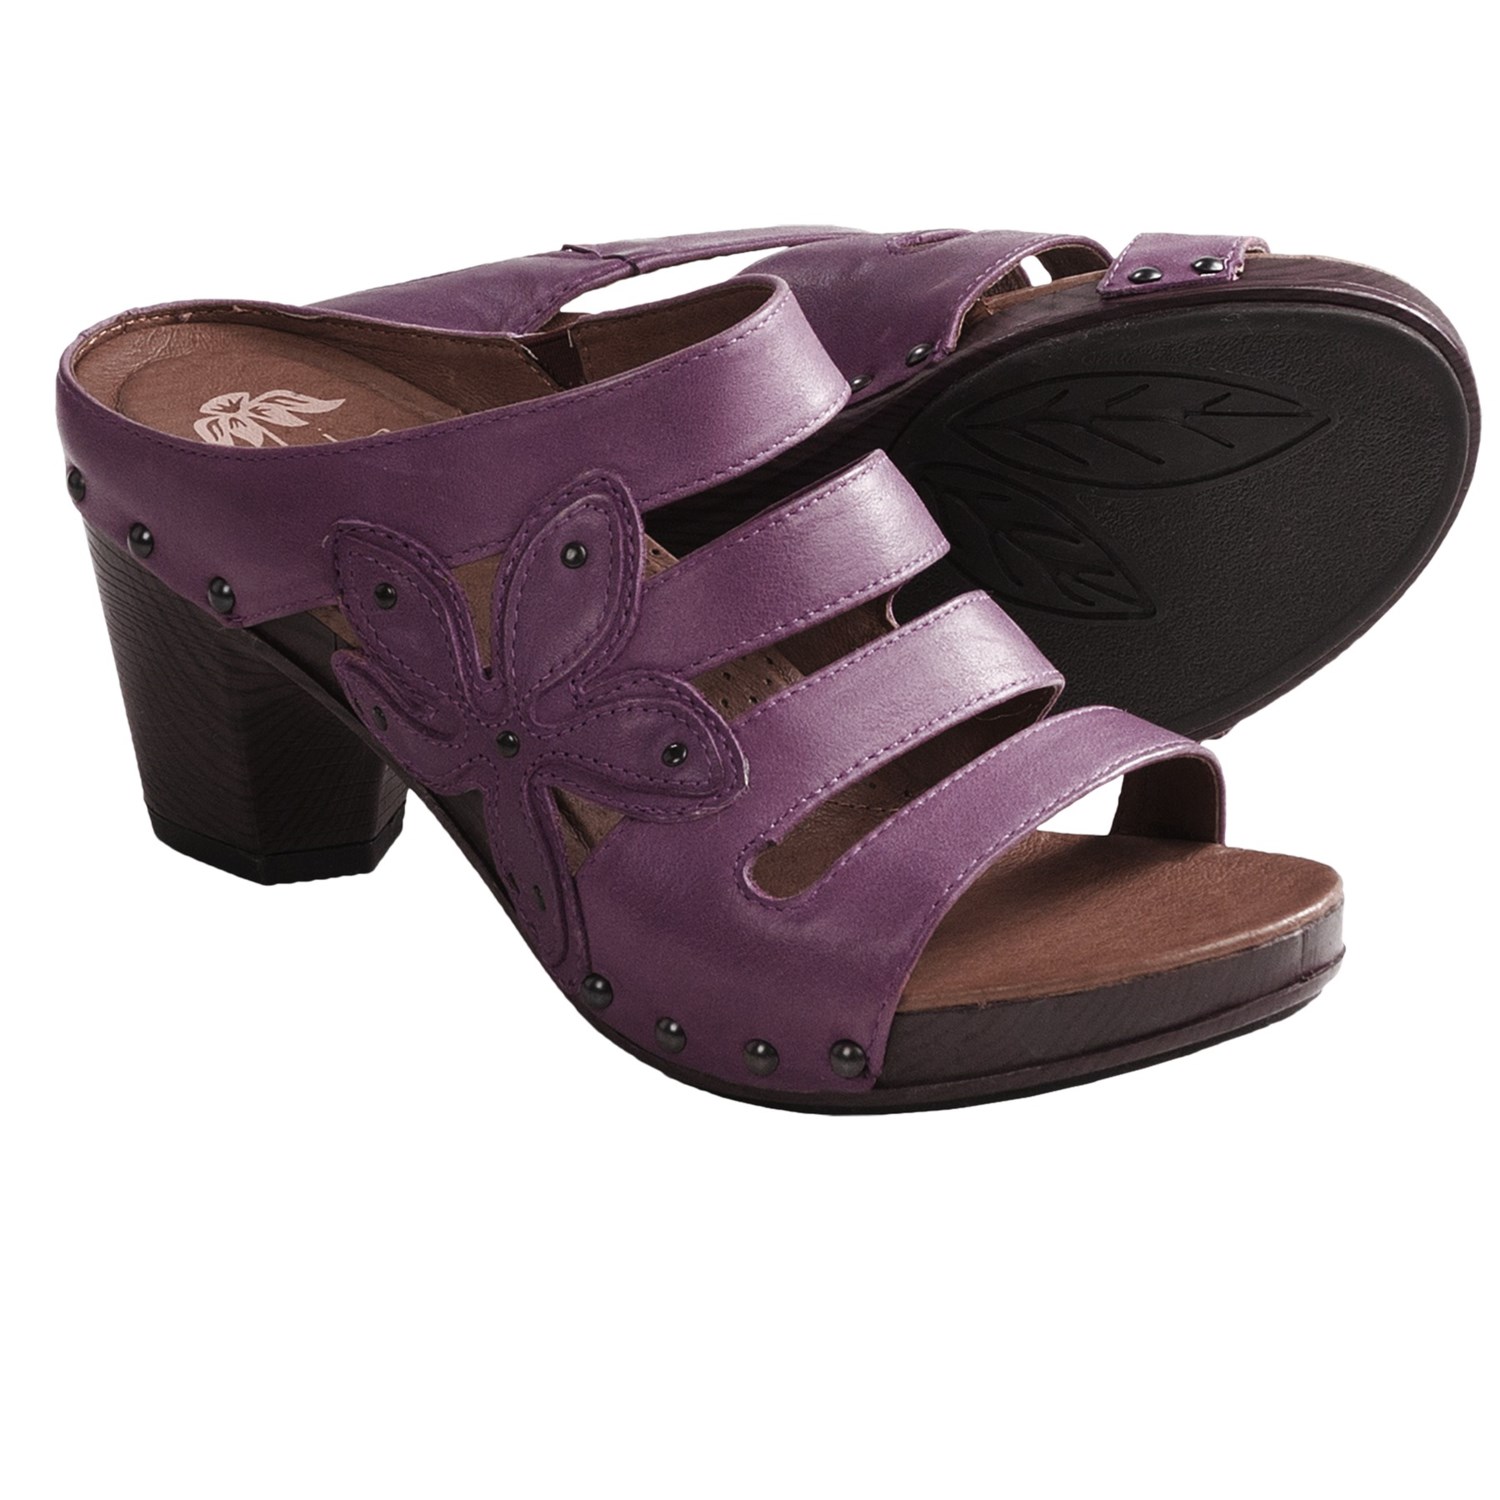 Dansko Nigella Sandals - Leather (For Women) in Violet Full Grain